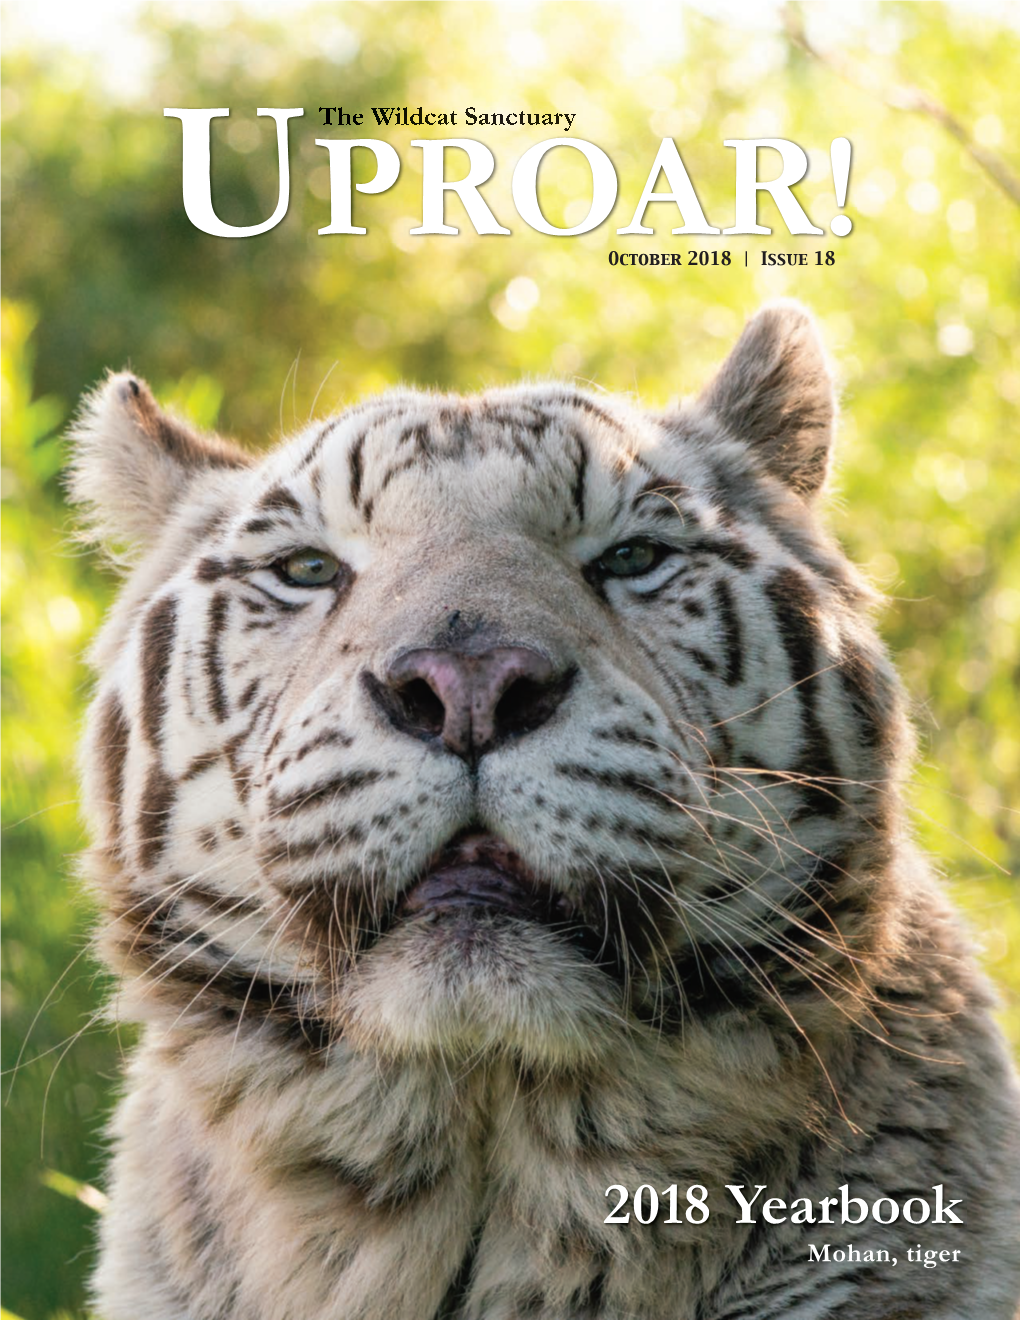 2018 Yearbook the Wildcat Sanctuary